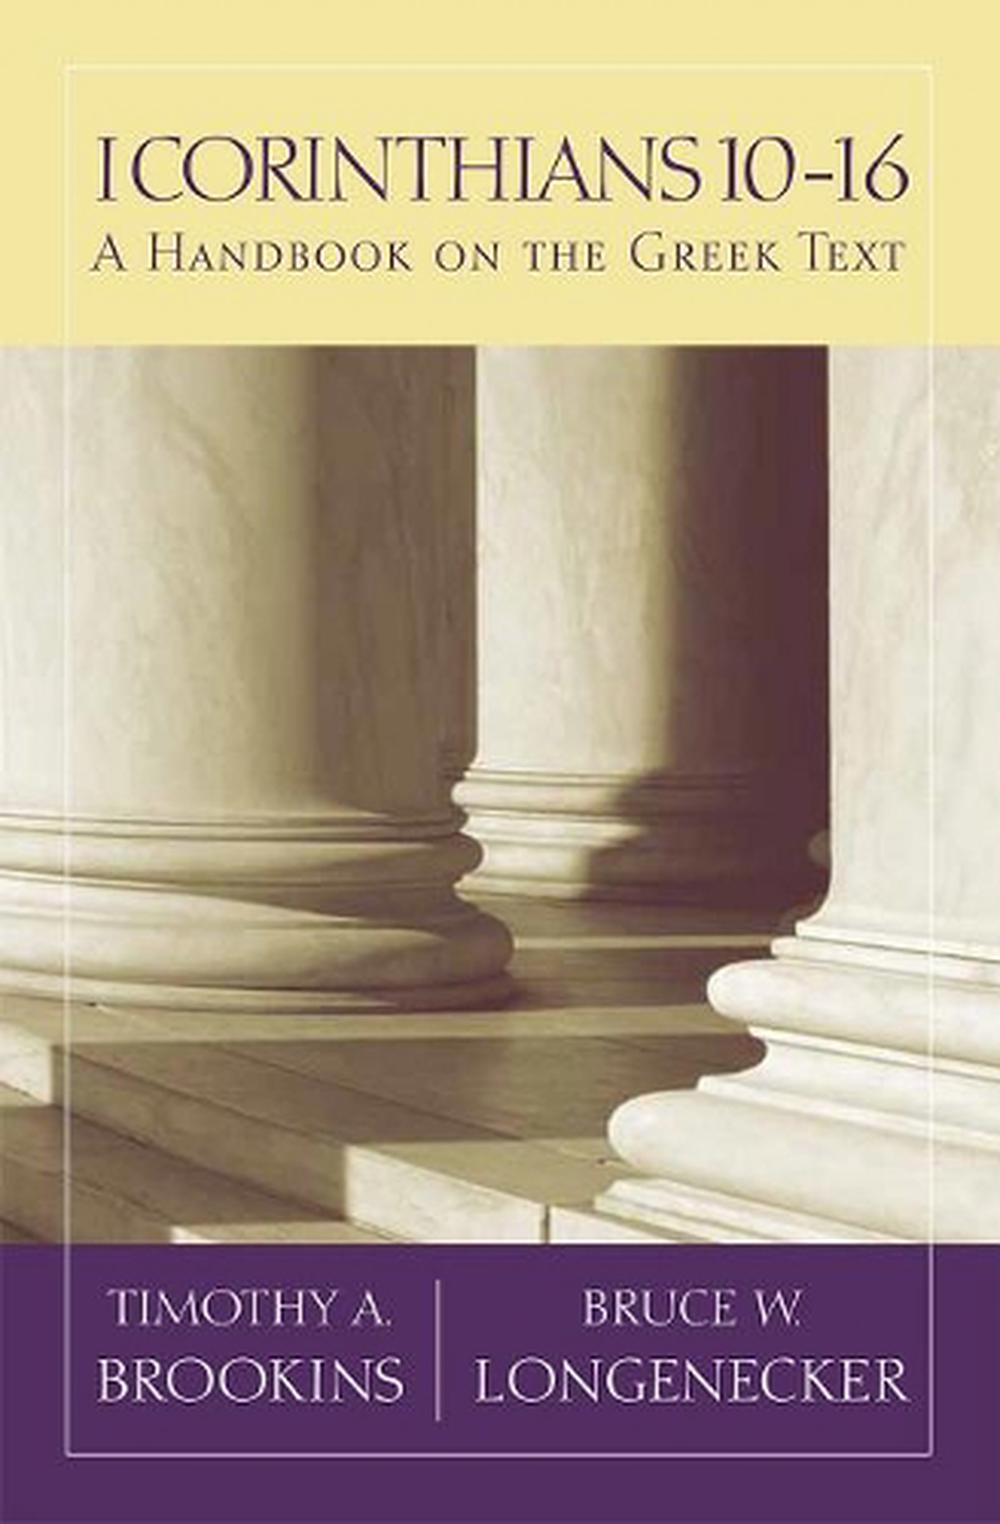 1 Corinthians 1016 A Handbook on the Greek Text by